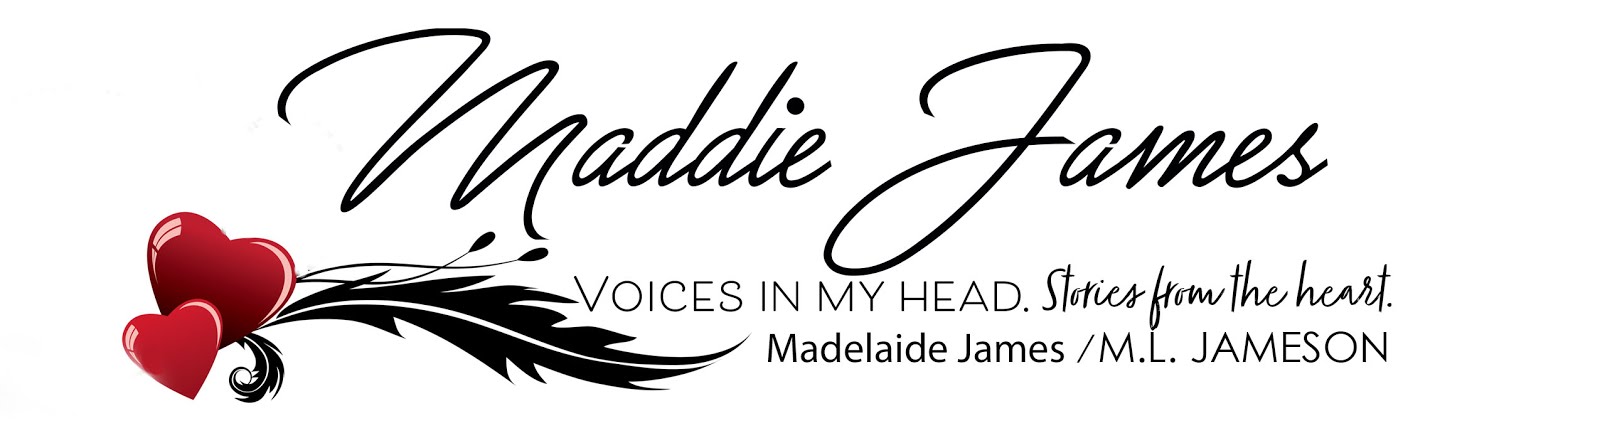 Bestselling Author, Maddie James